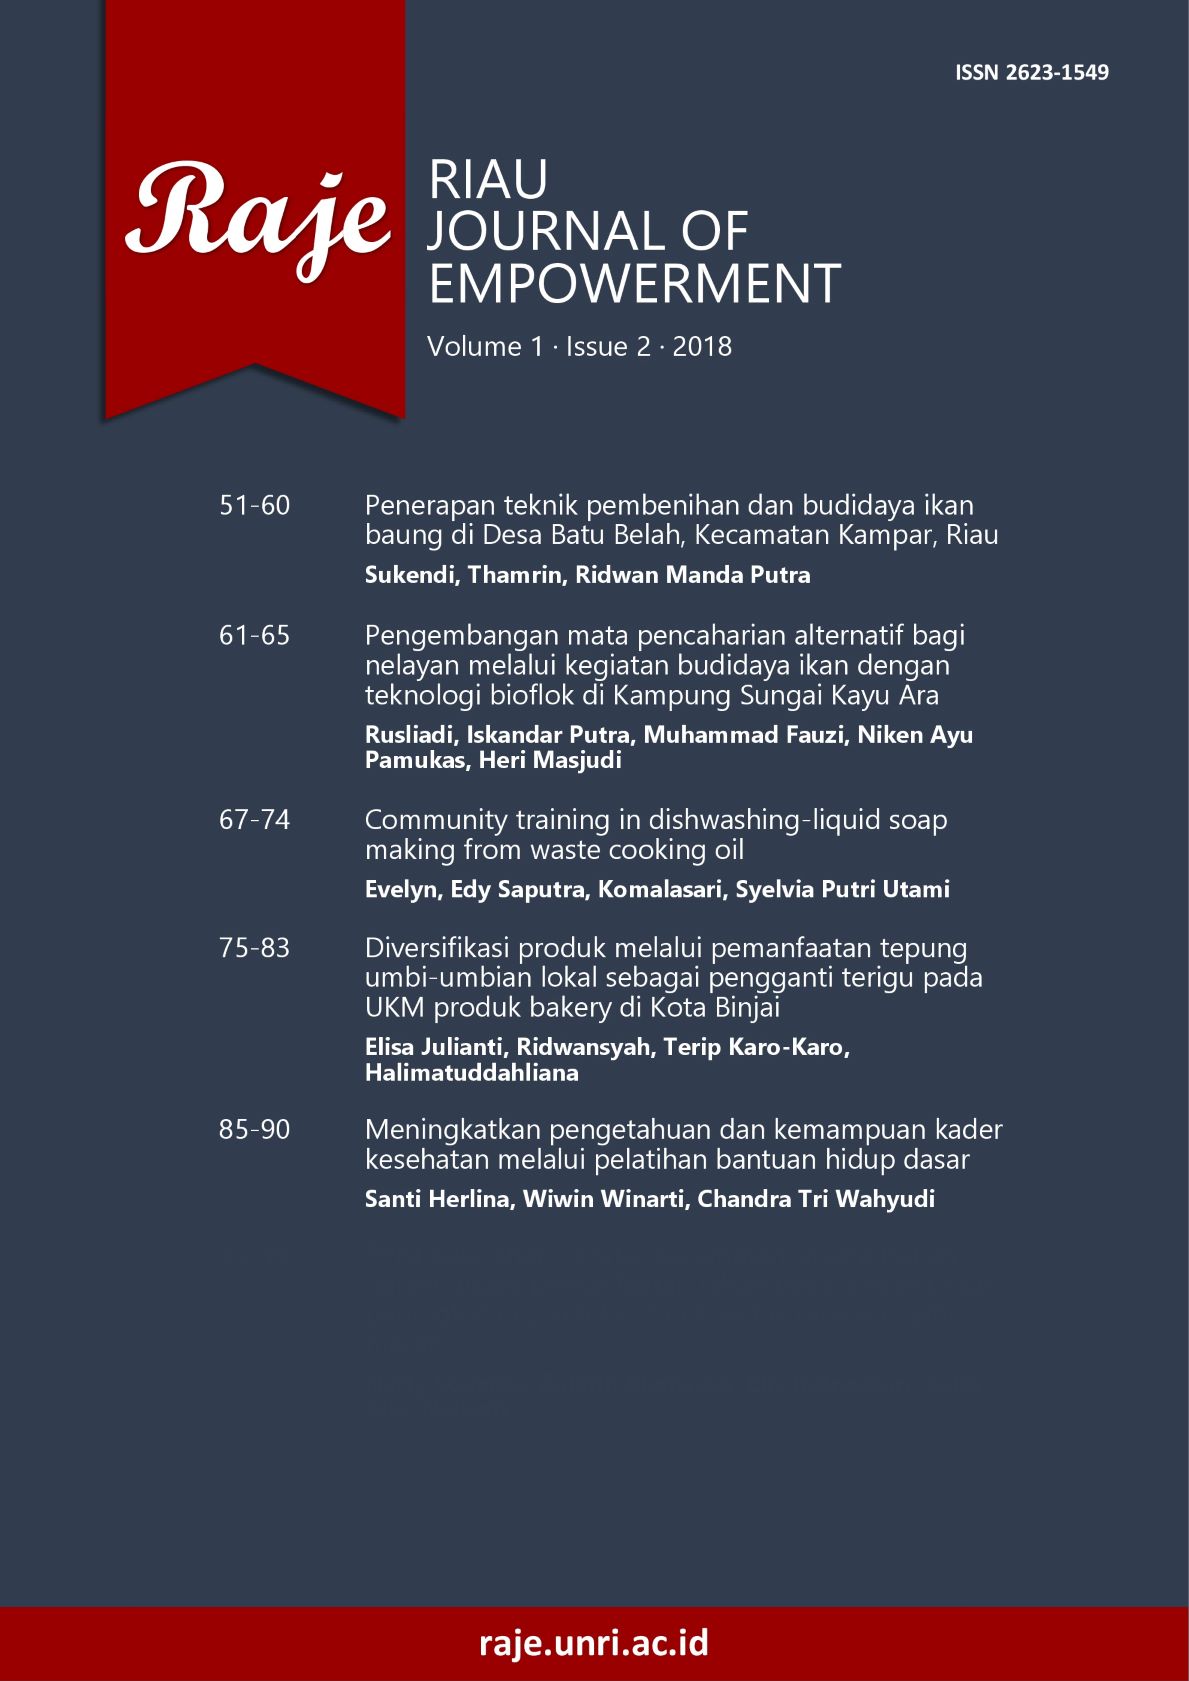 Riau Journal of Empowerment 1(2) 2018